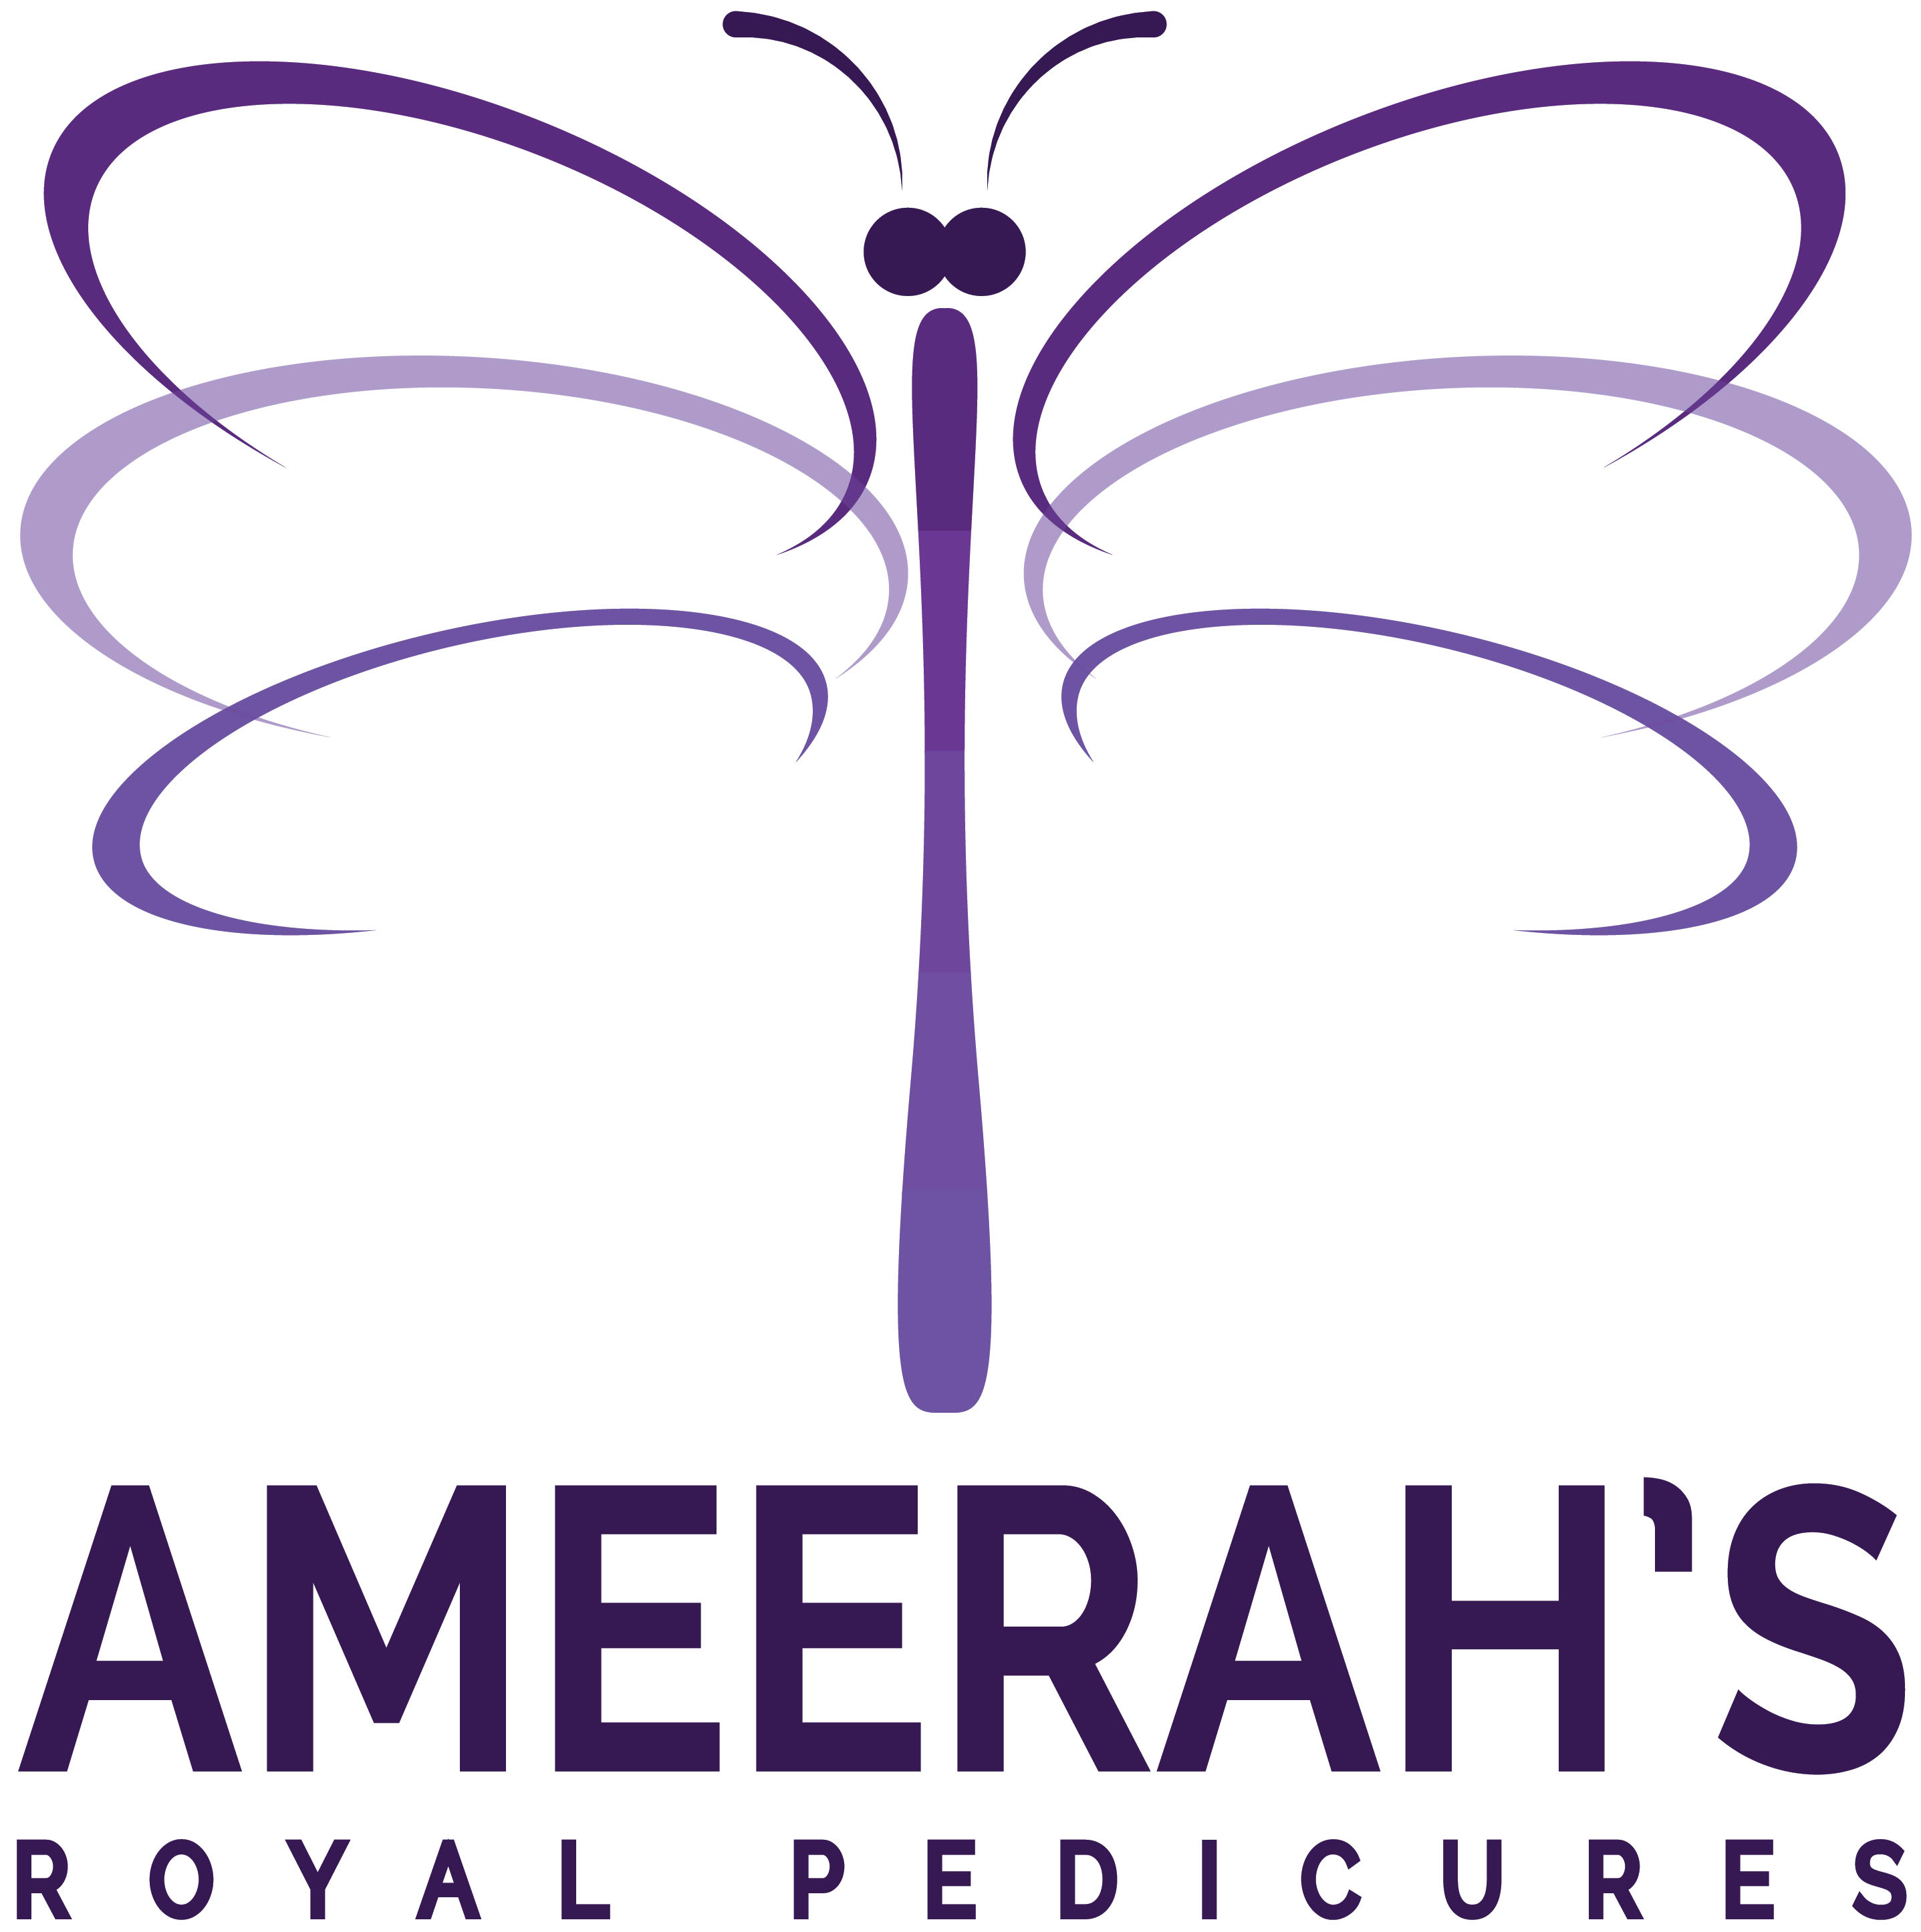 Ameerah's Royal Pedicures